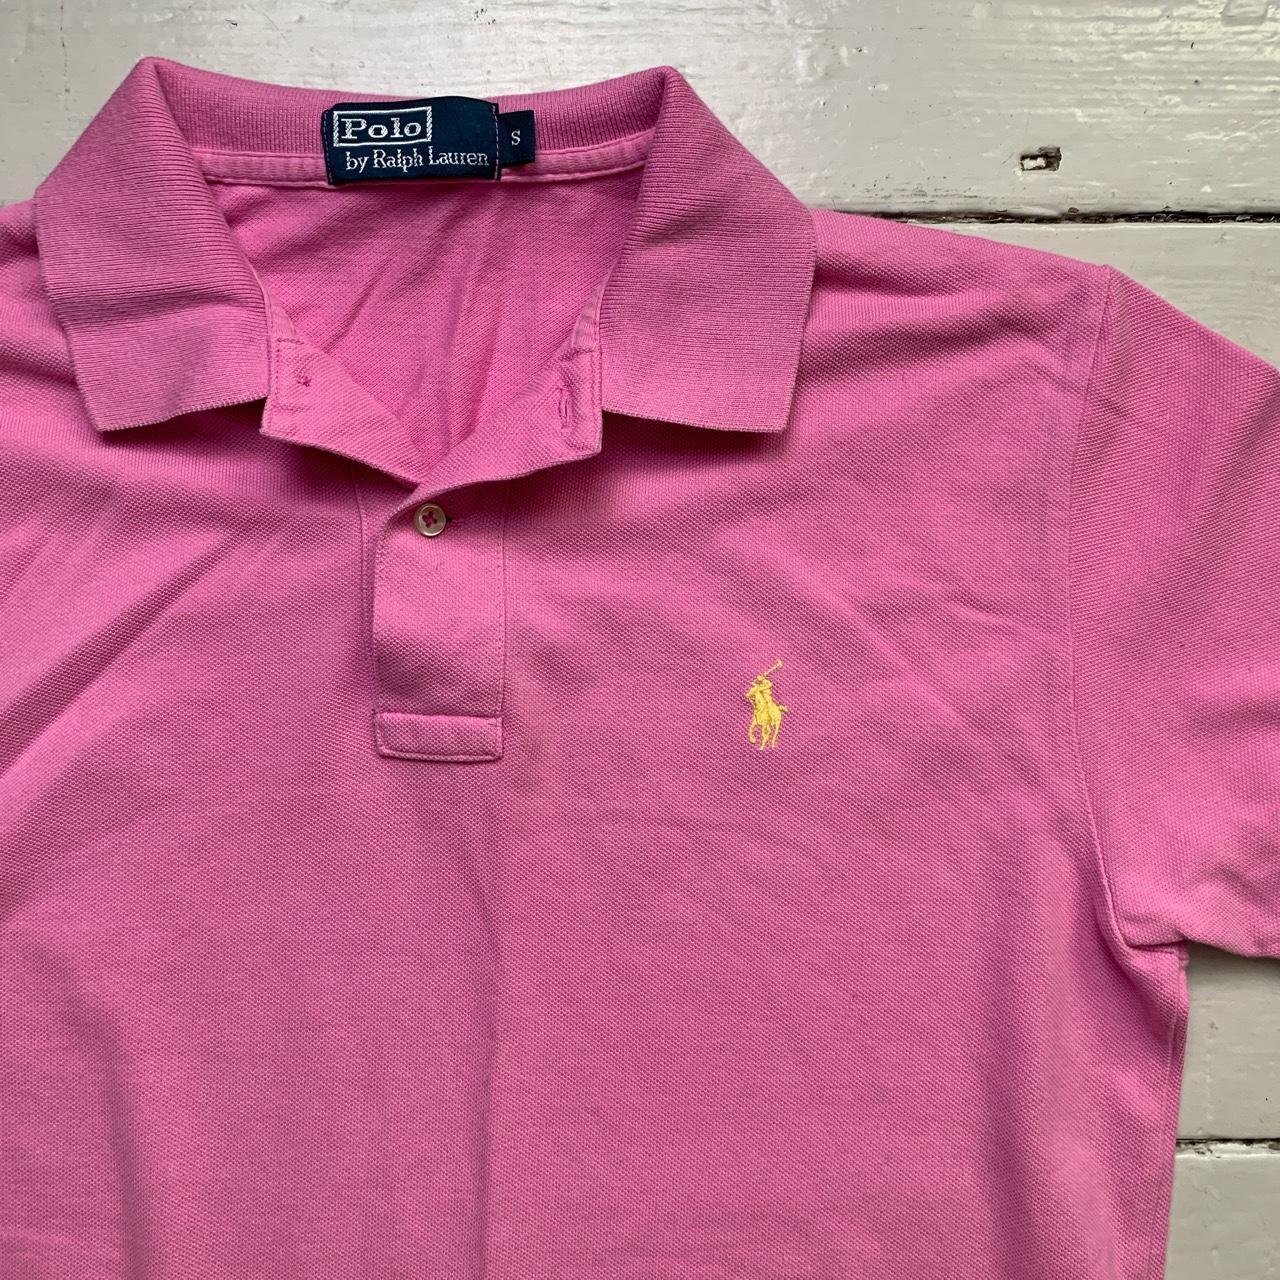 Polo Ralph Lauren Pink and Yellow Vintage Polo Shirt